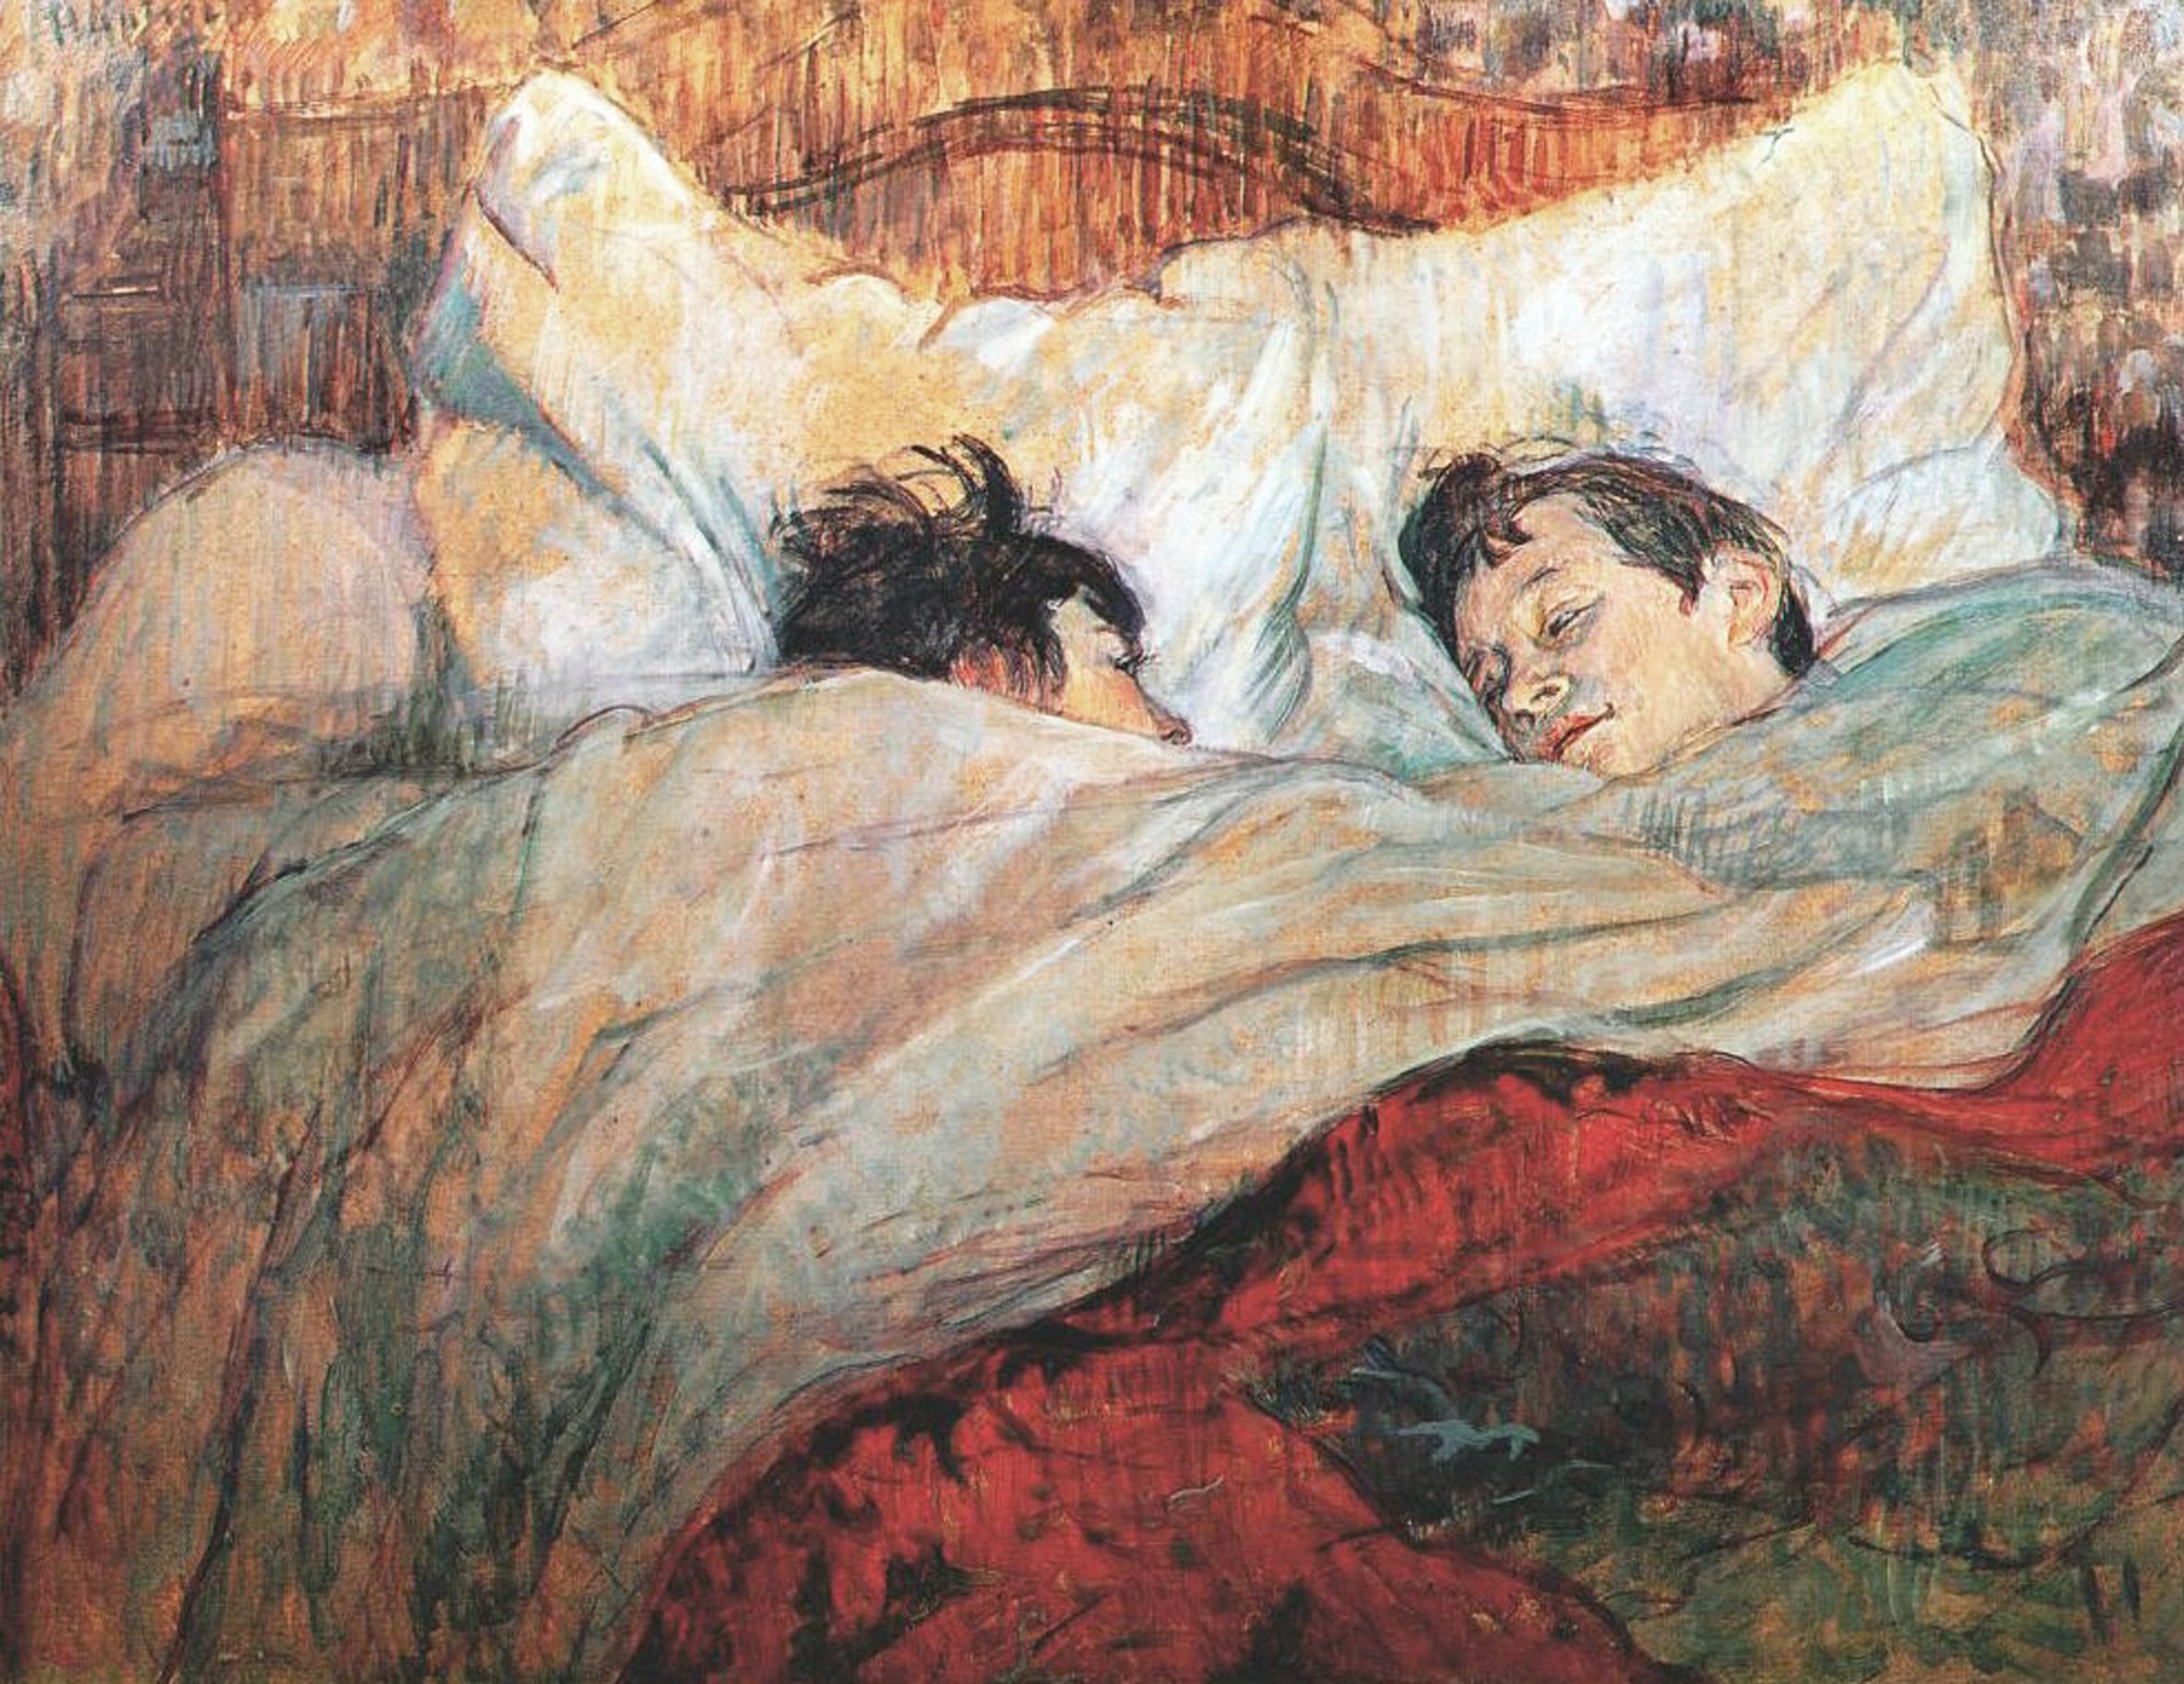 http://en.wikipedia.org/wiki/File:Lautrec_in_bed_1893.jpg~~V